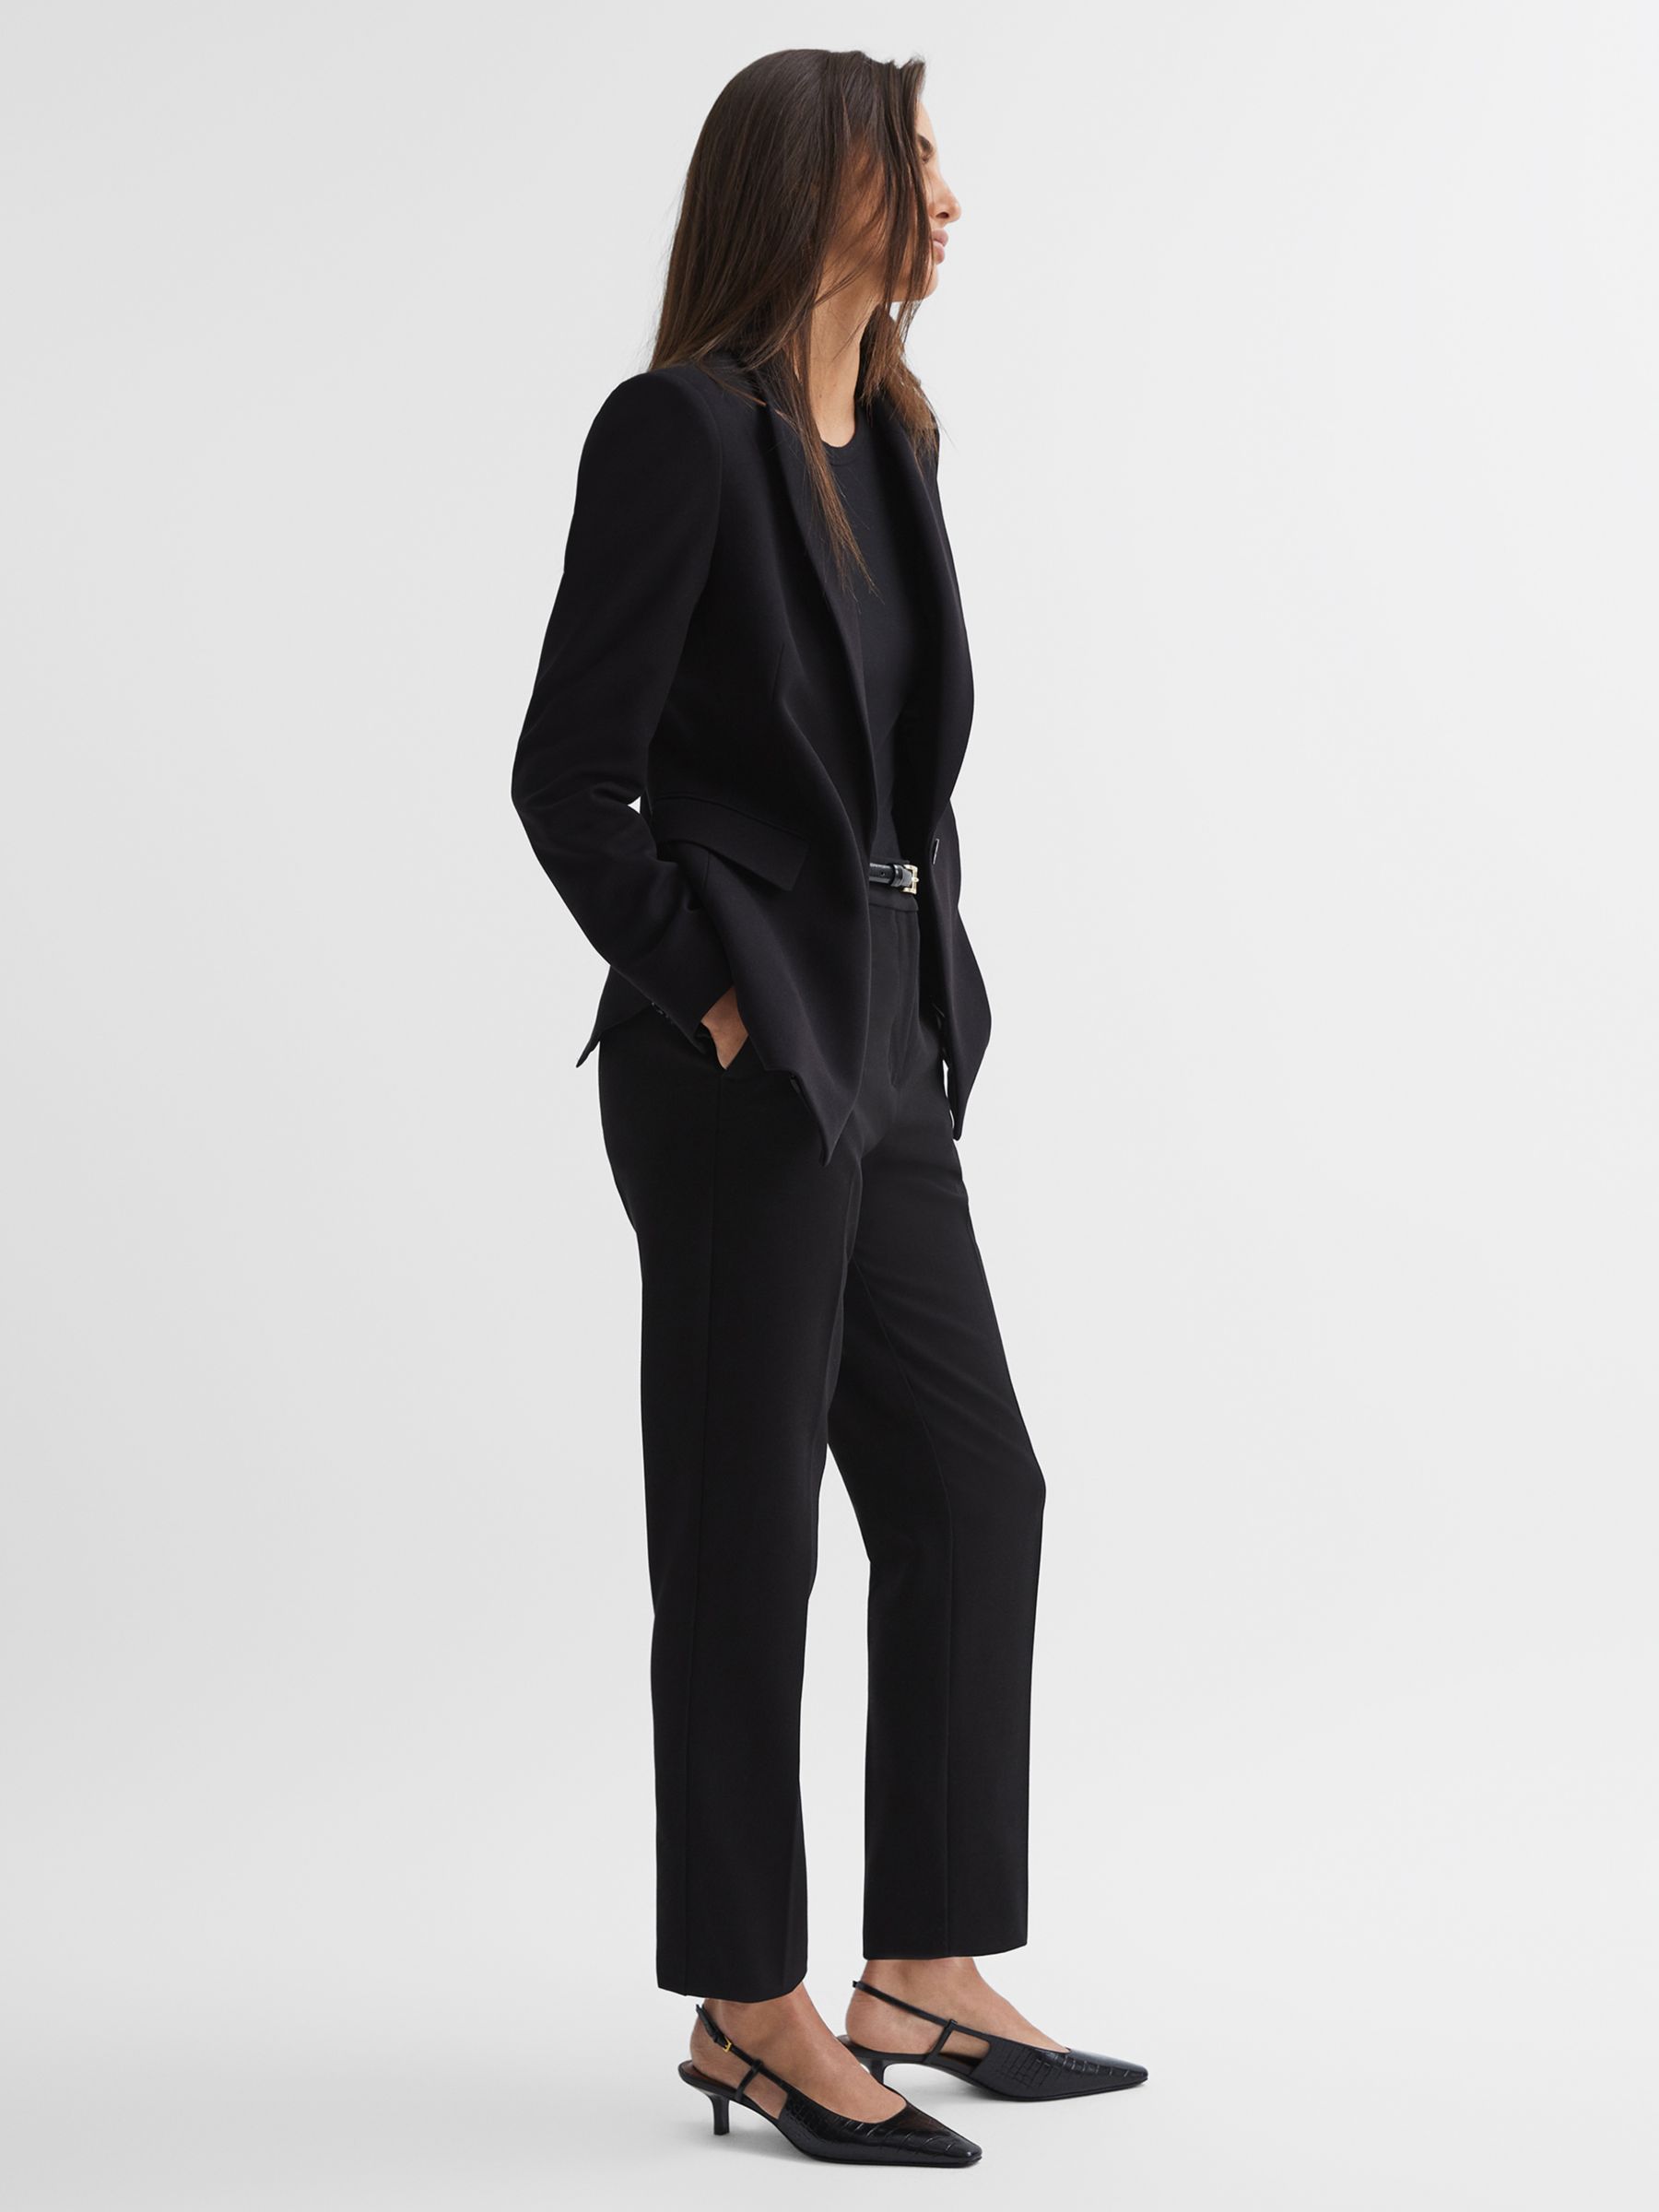 Reiss Gabi Slim Fit Tailored Suit Trousers, Black at John Lewis & Partners